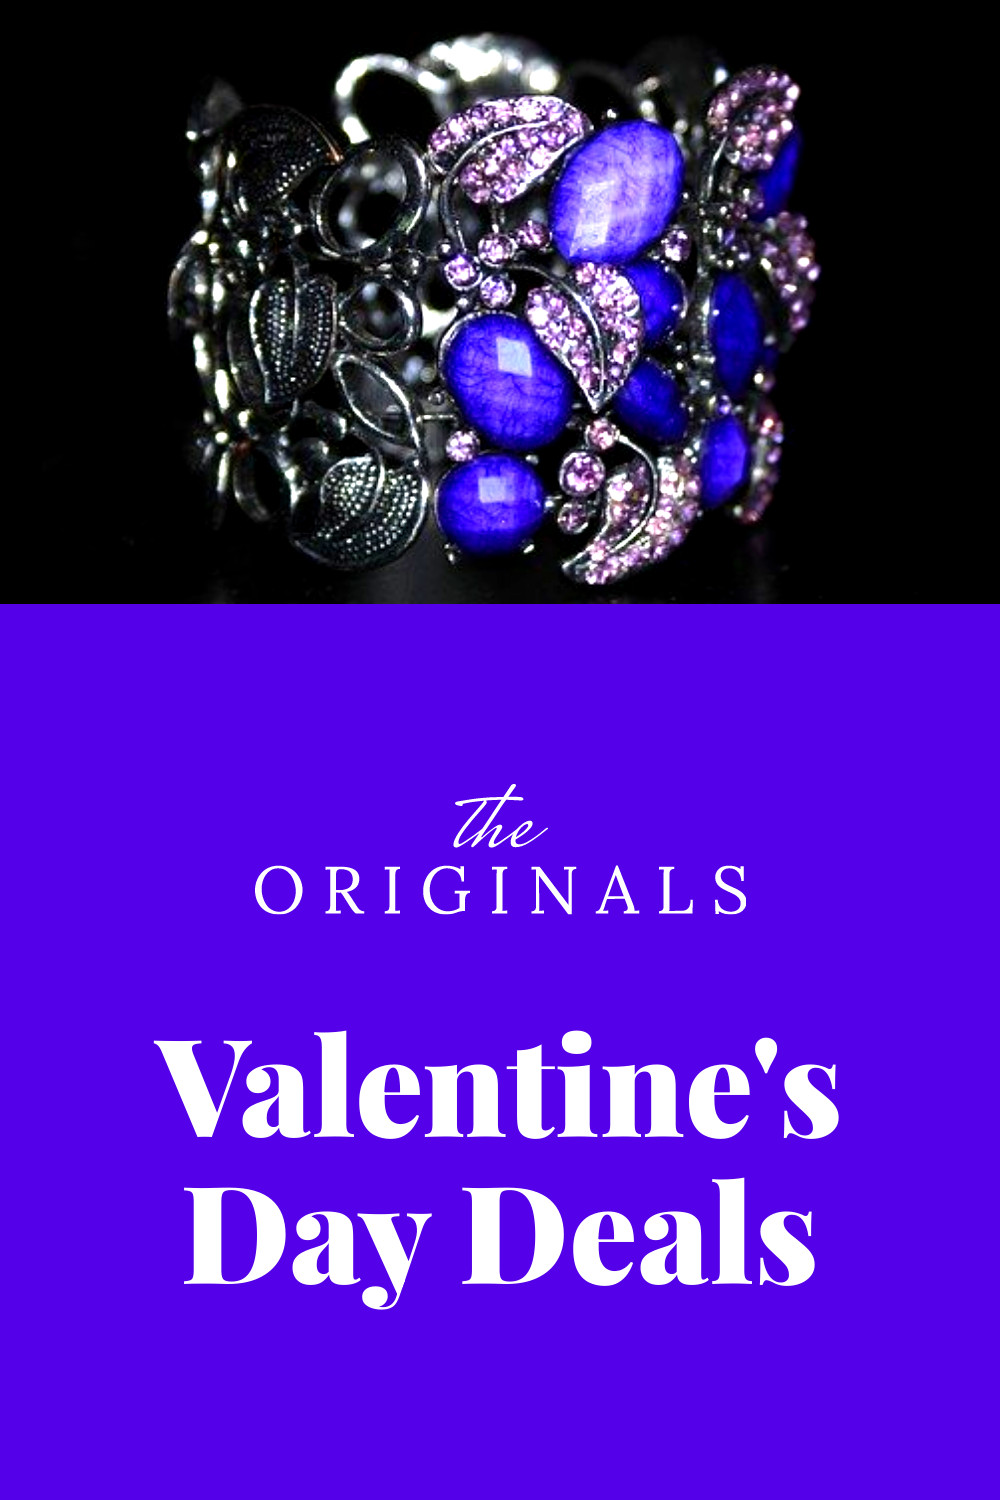 Valentine's Day Blue Jewelry Deals